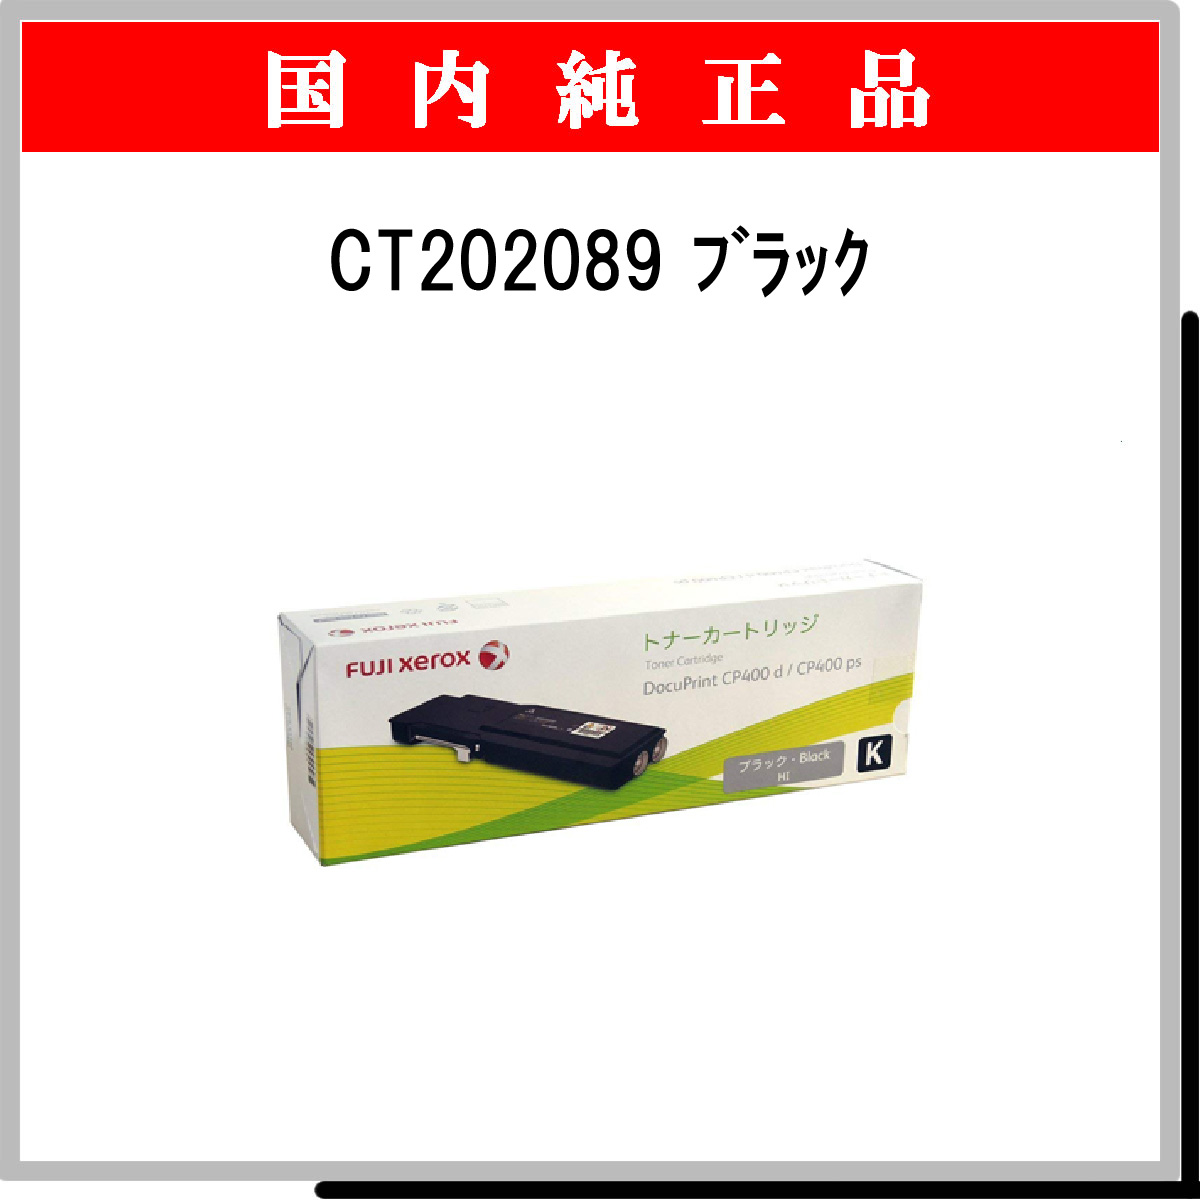 CT202091Mマゼンタ汎用品(ゼロックス)(DocuPrint CP400d、CP400ps) PC - 1